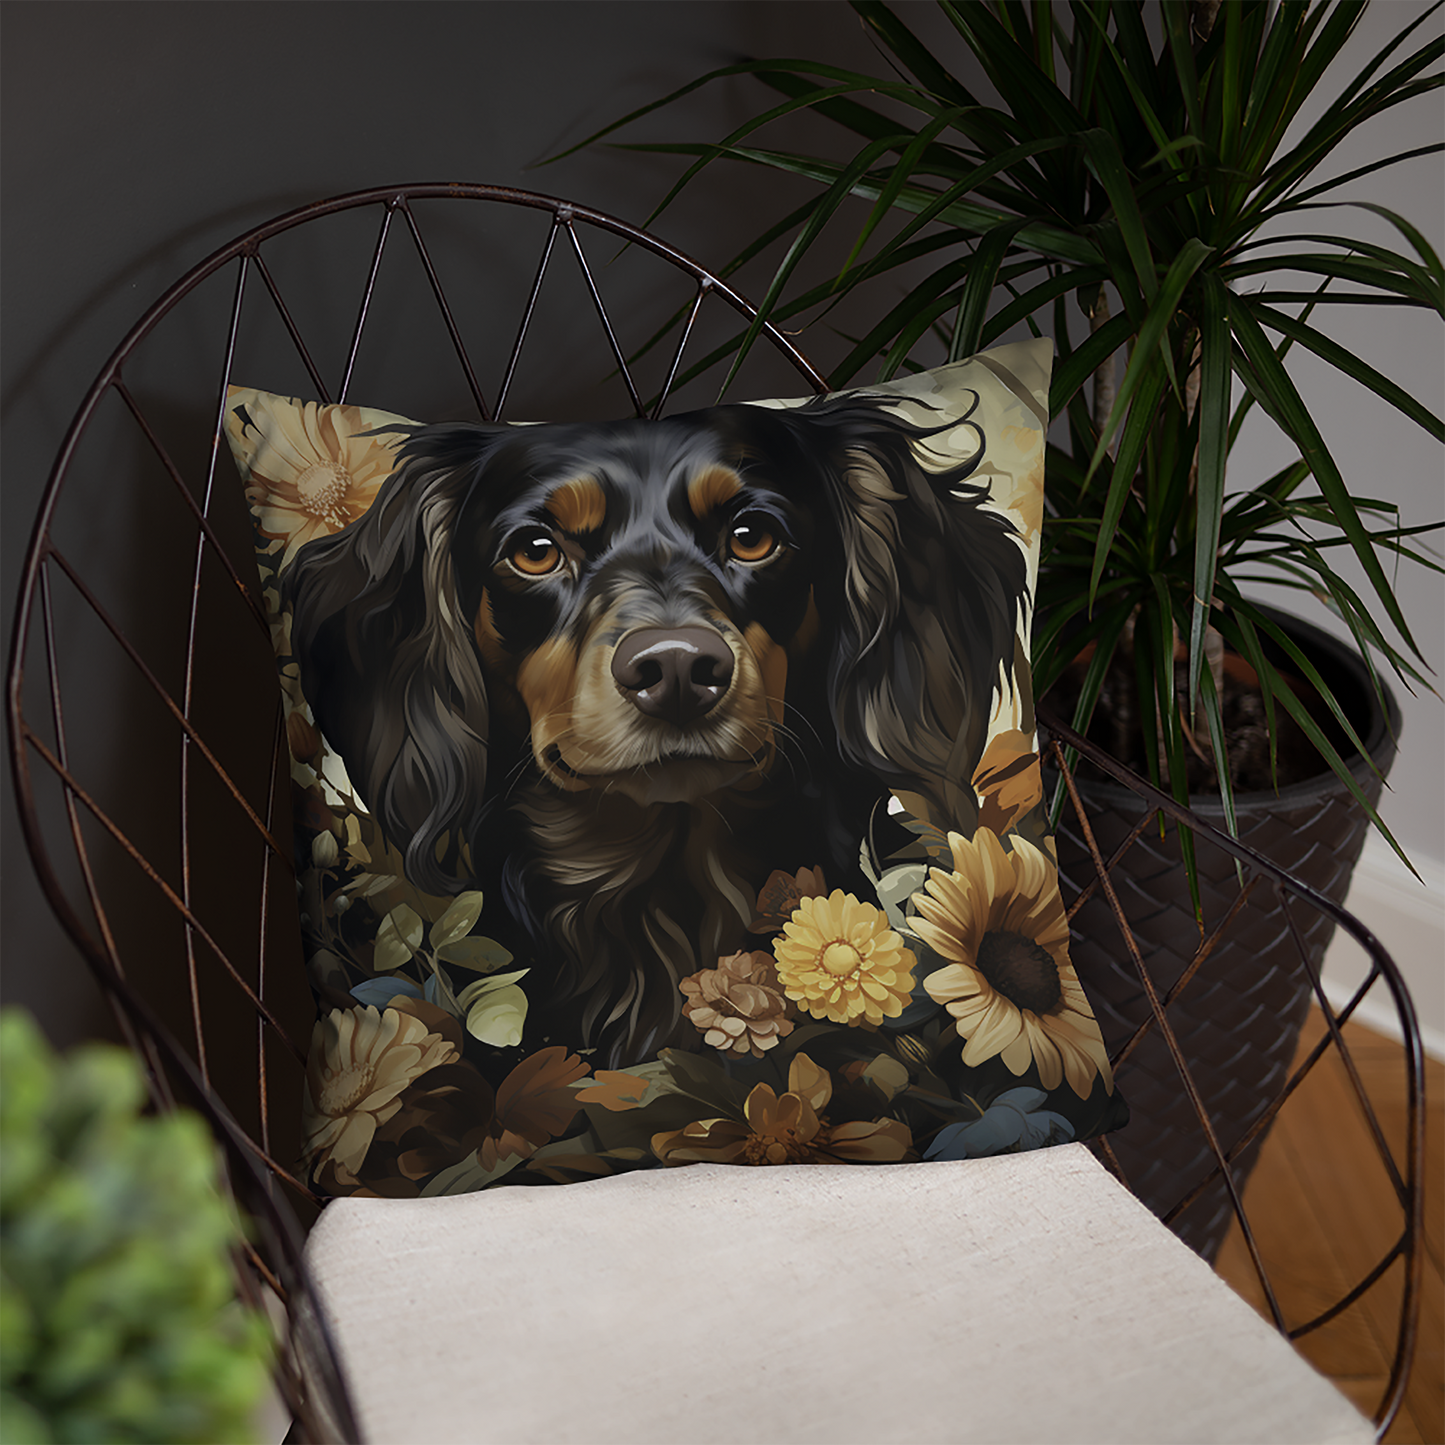 Dog Throw Pillow Elegant Dachshund Amidst Orange Blooms Polyester Decorative Cushion 18x18